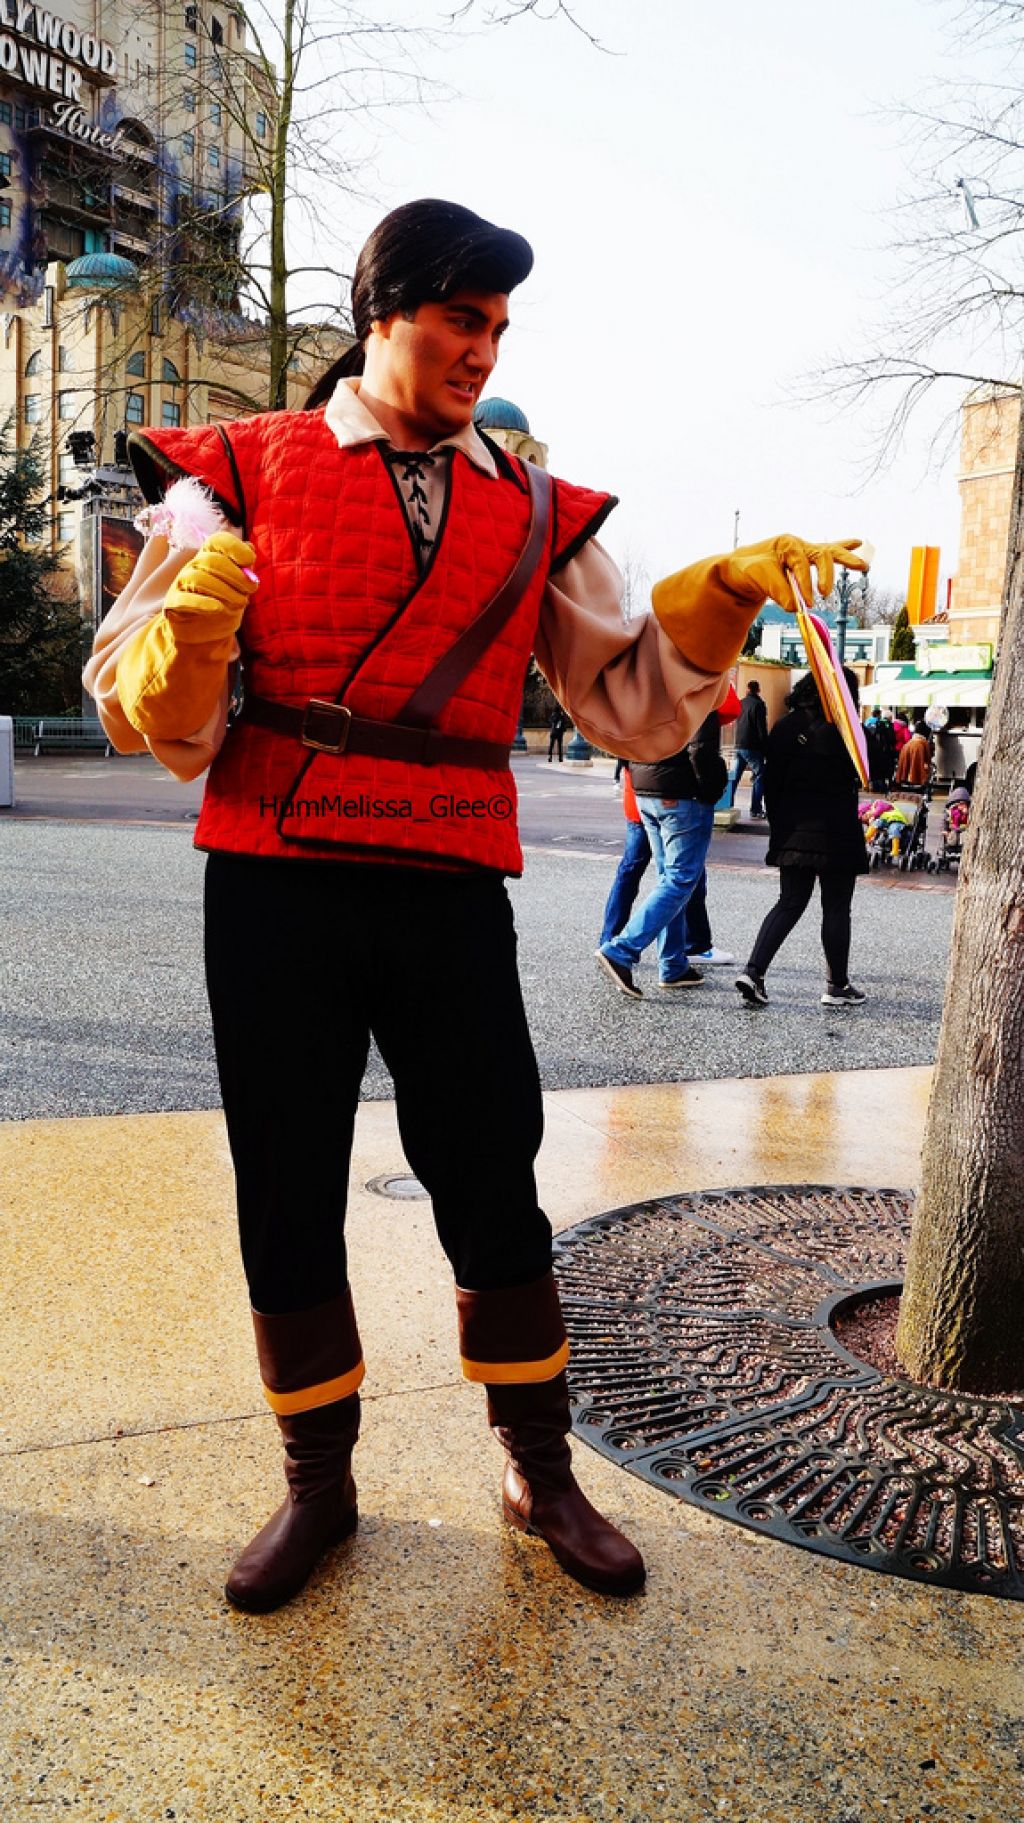 disneyland paris12 Disney Magic on Parade, Disneyland Paris